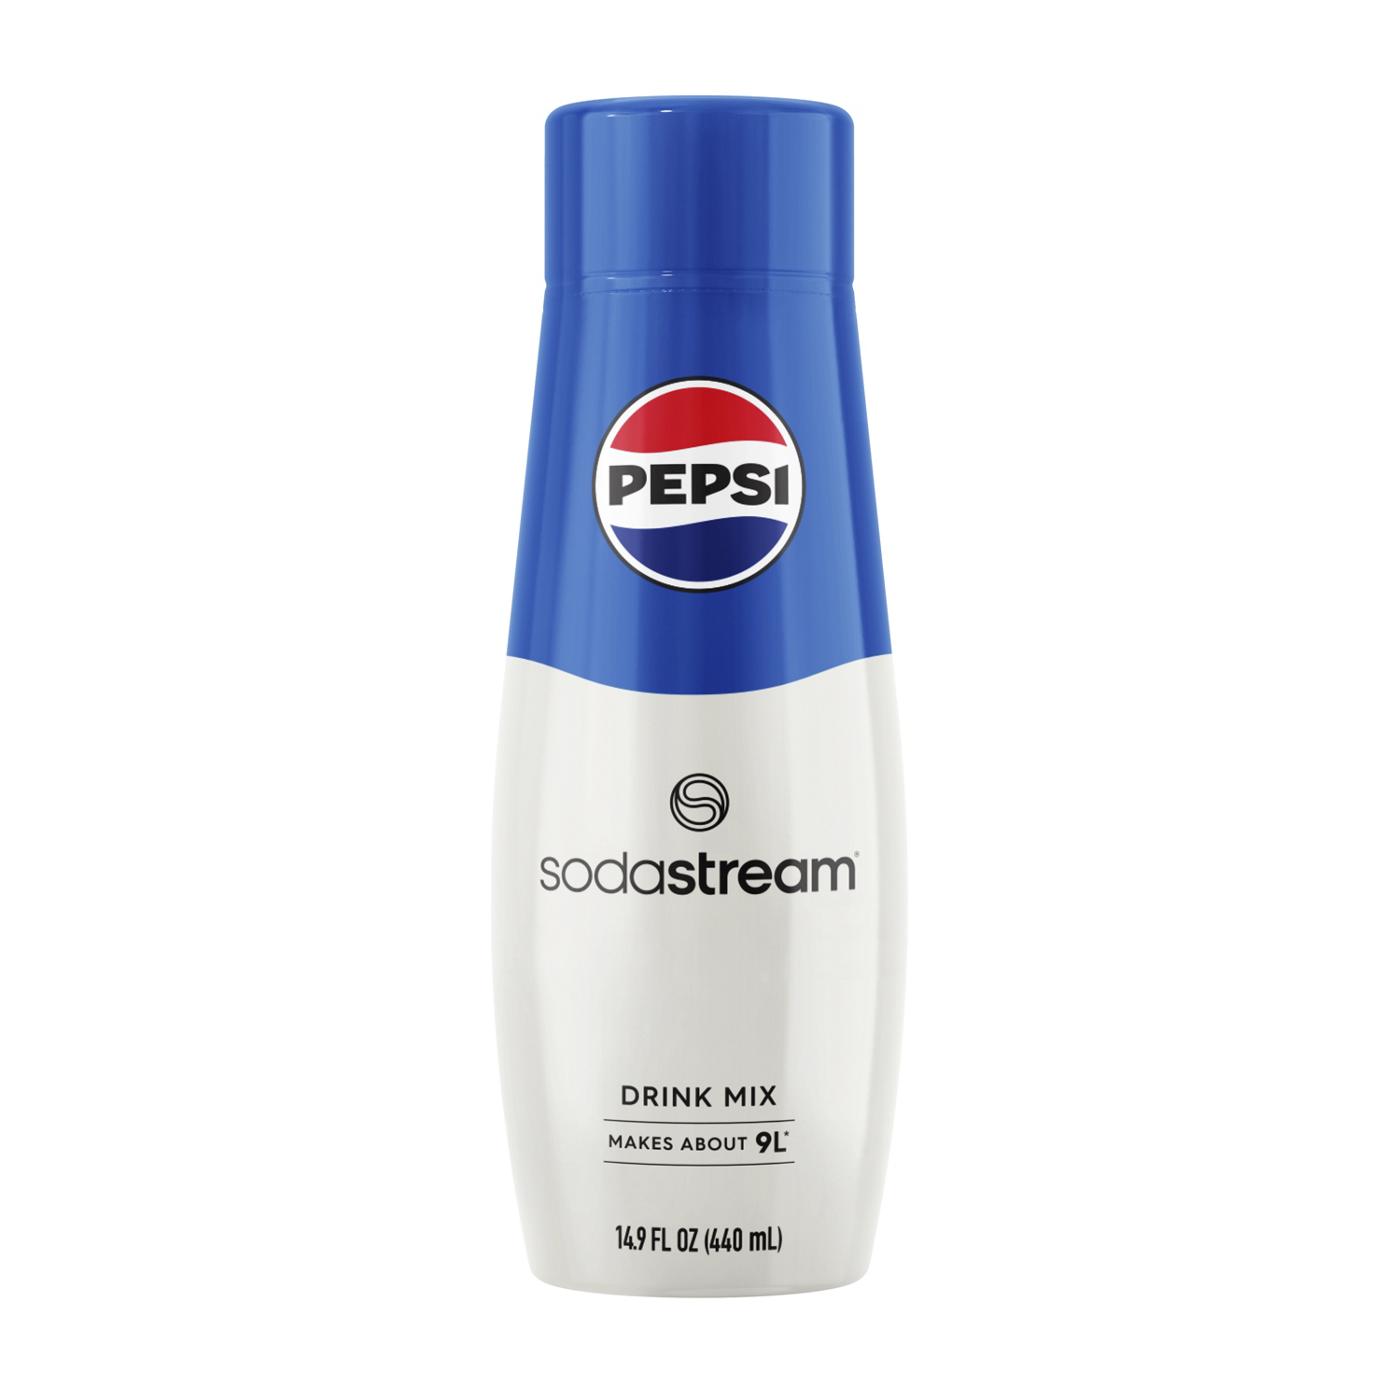 SodaStream Pepsi Drink Mix; image 1 of 2